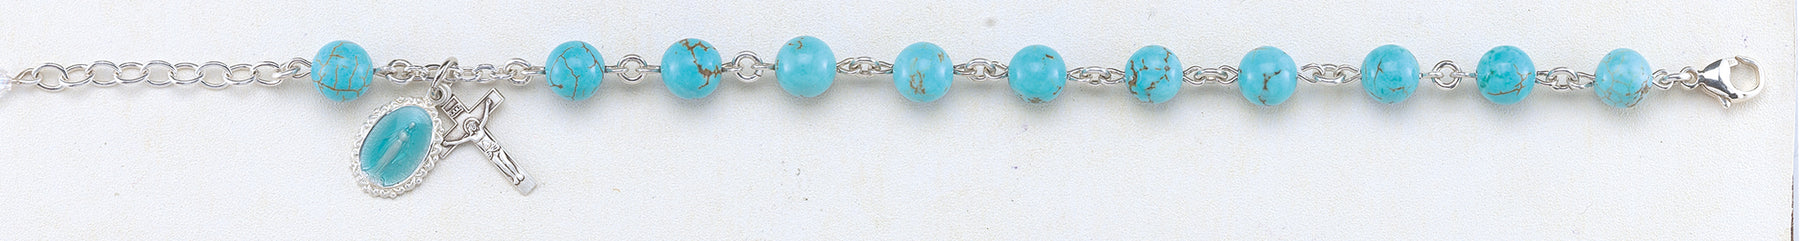 8mm Genuine Turquoise Rosary Bracelet